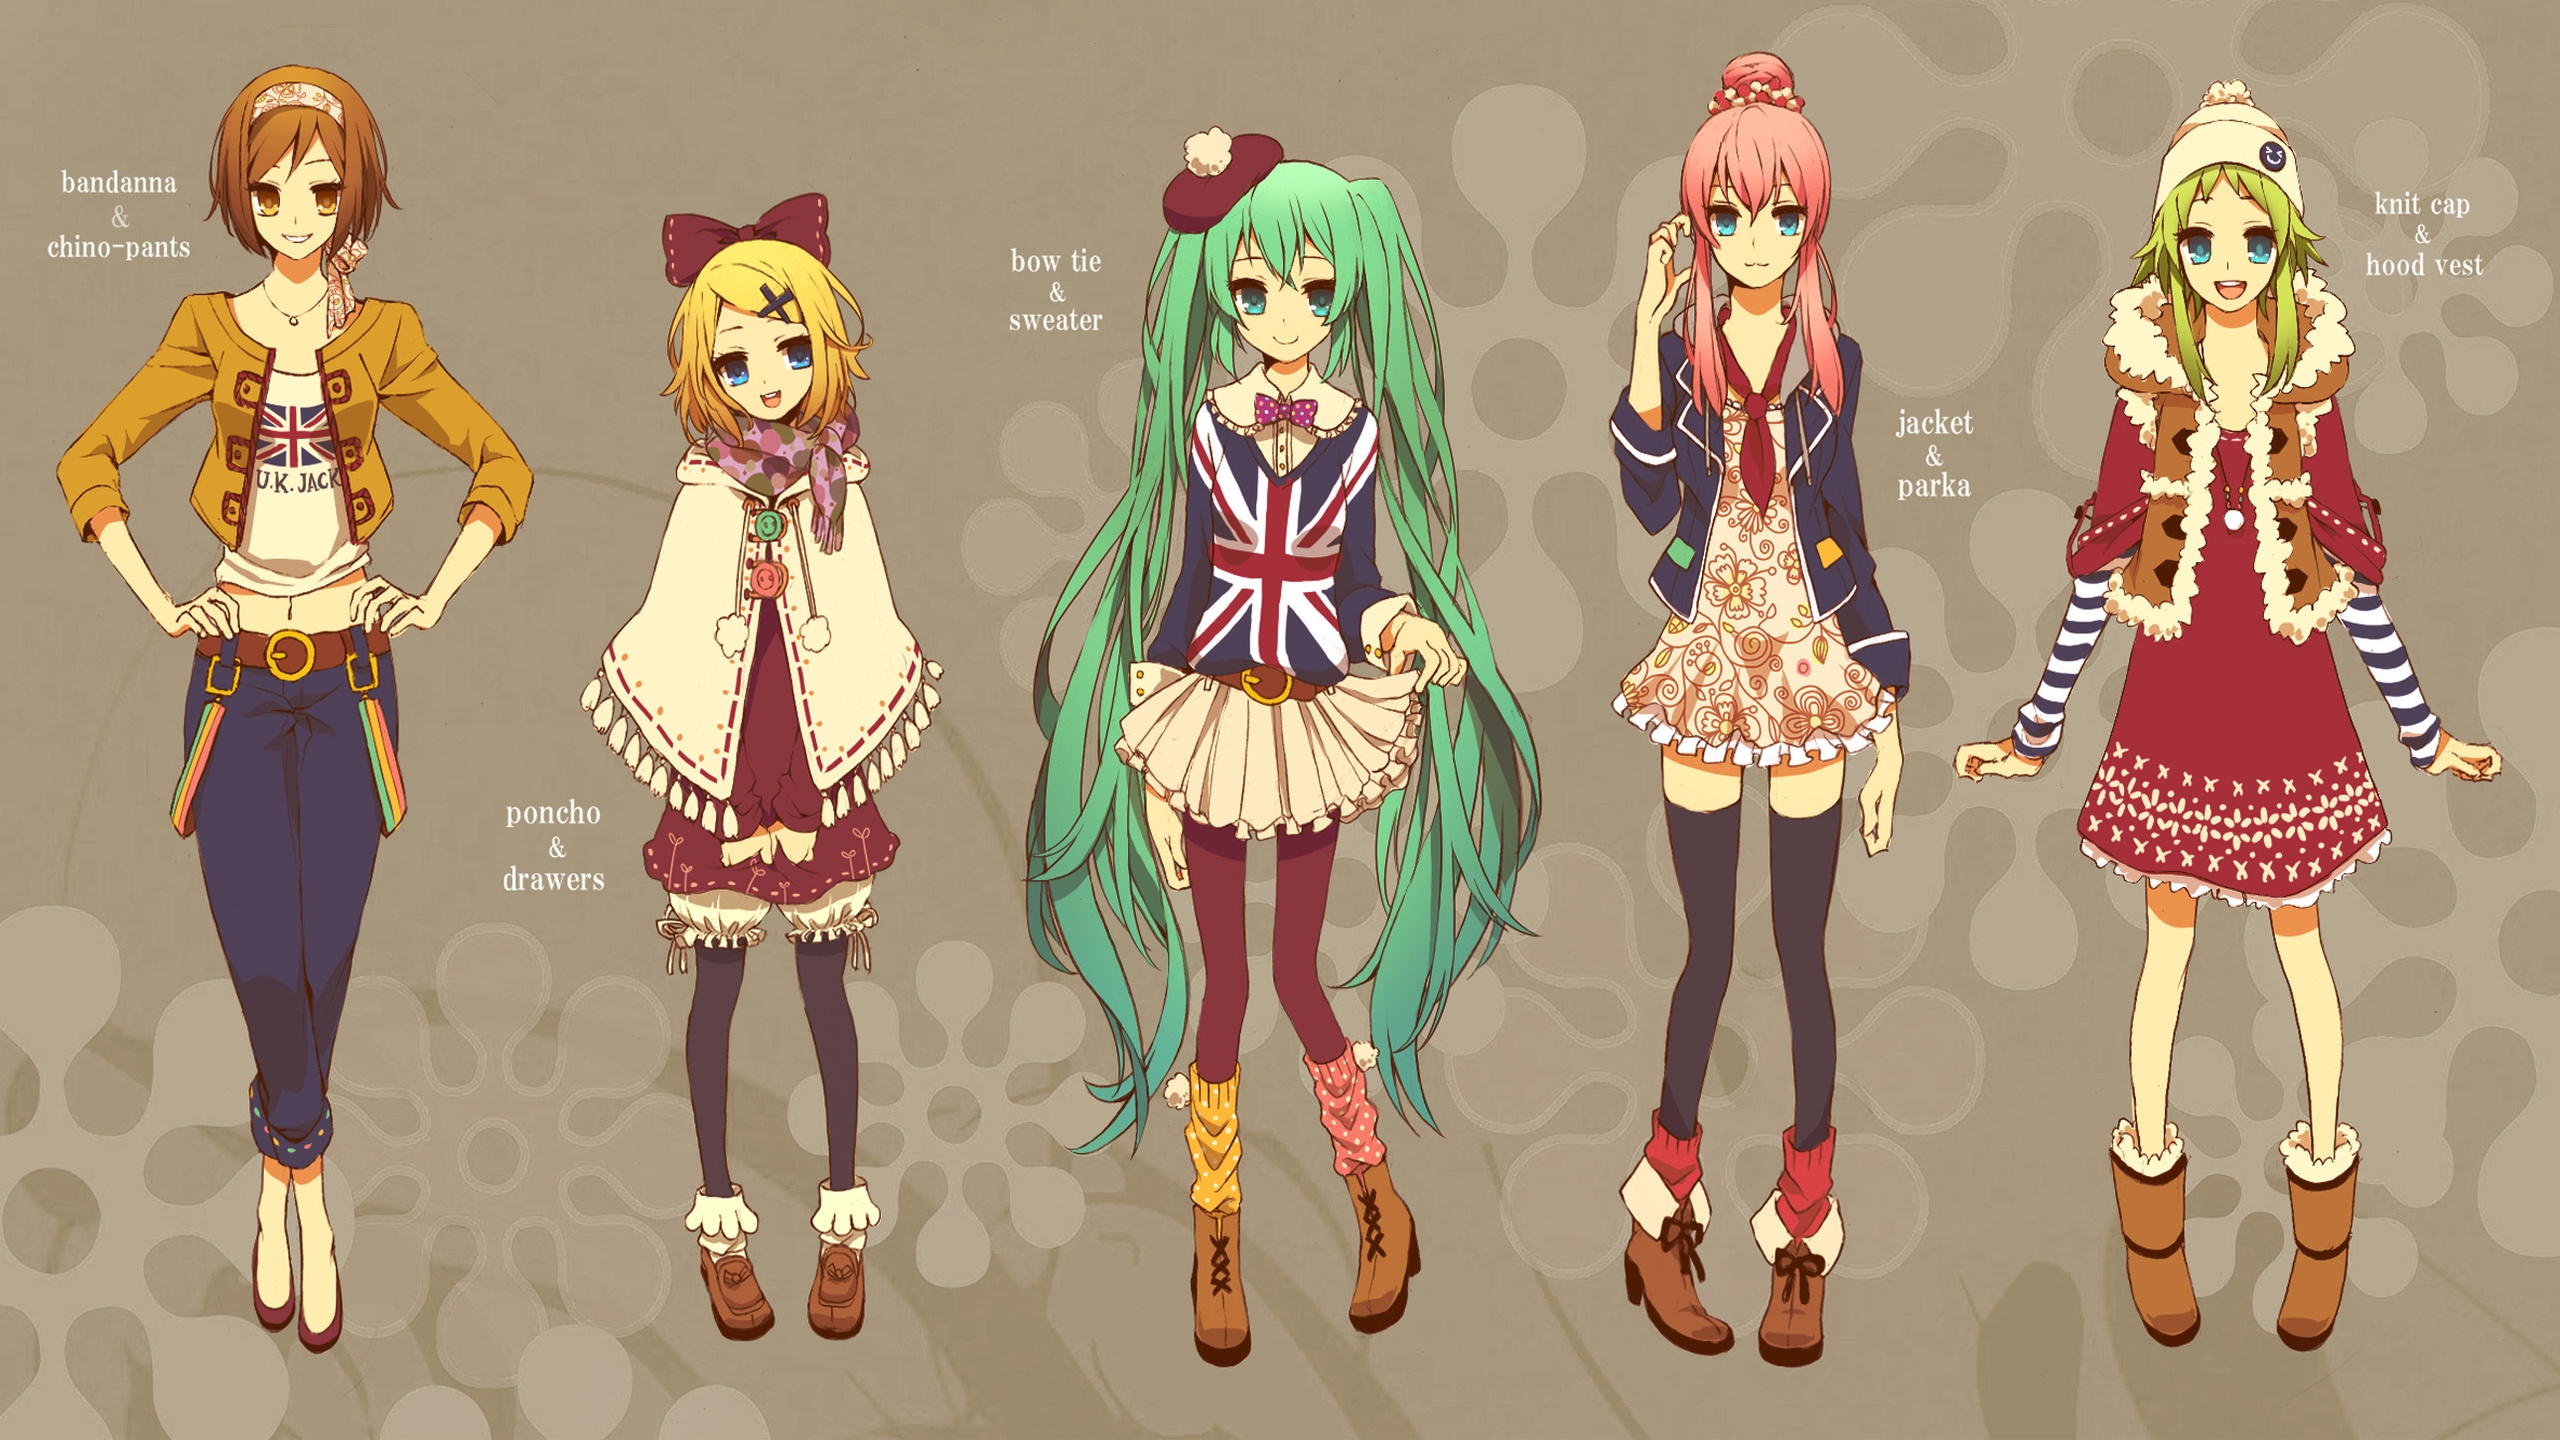 Wallpaper, illustration, pattern, Vocaloid, cute, girl, smile, clothes, costume design 2560x1440